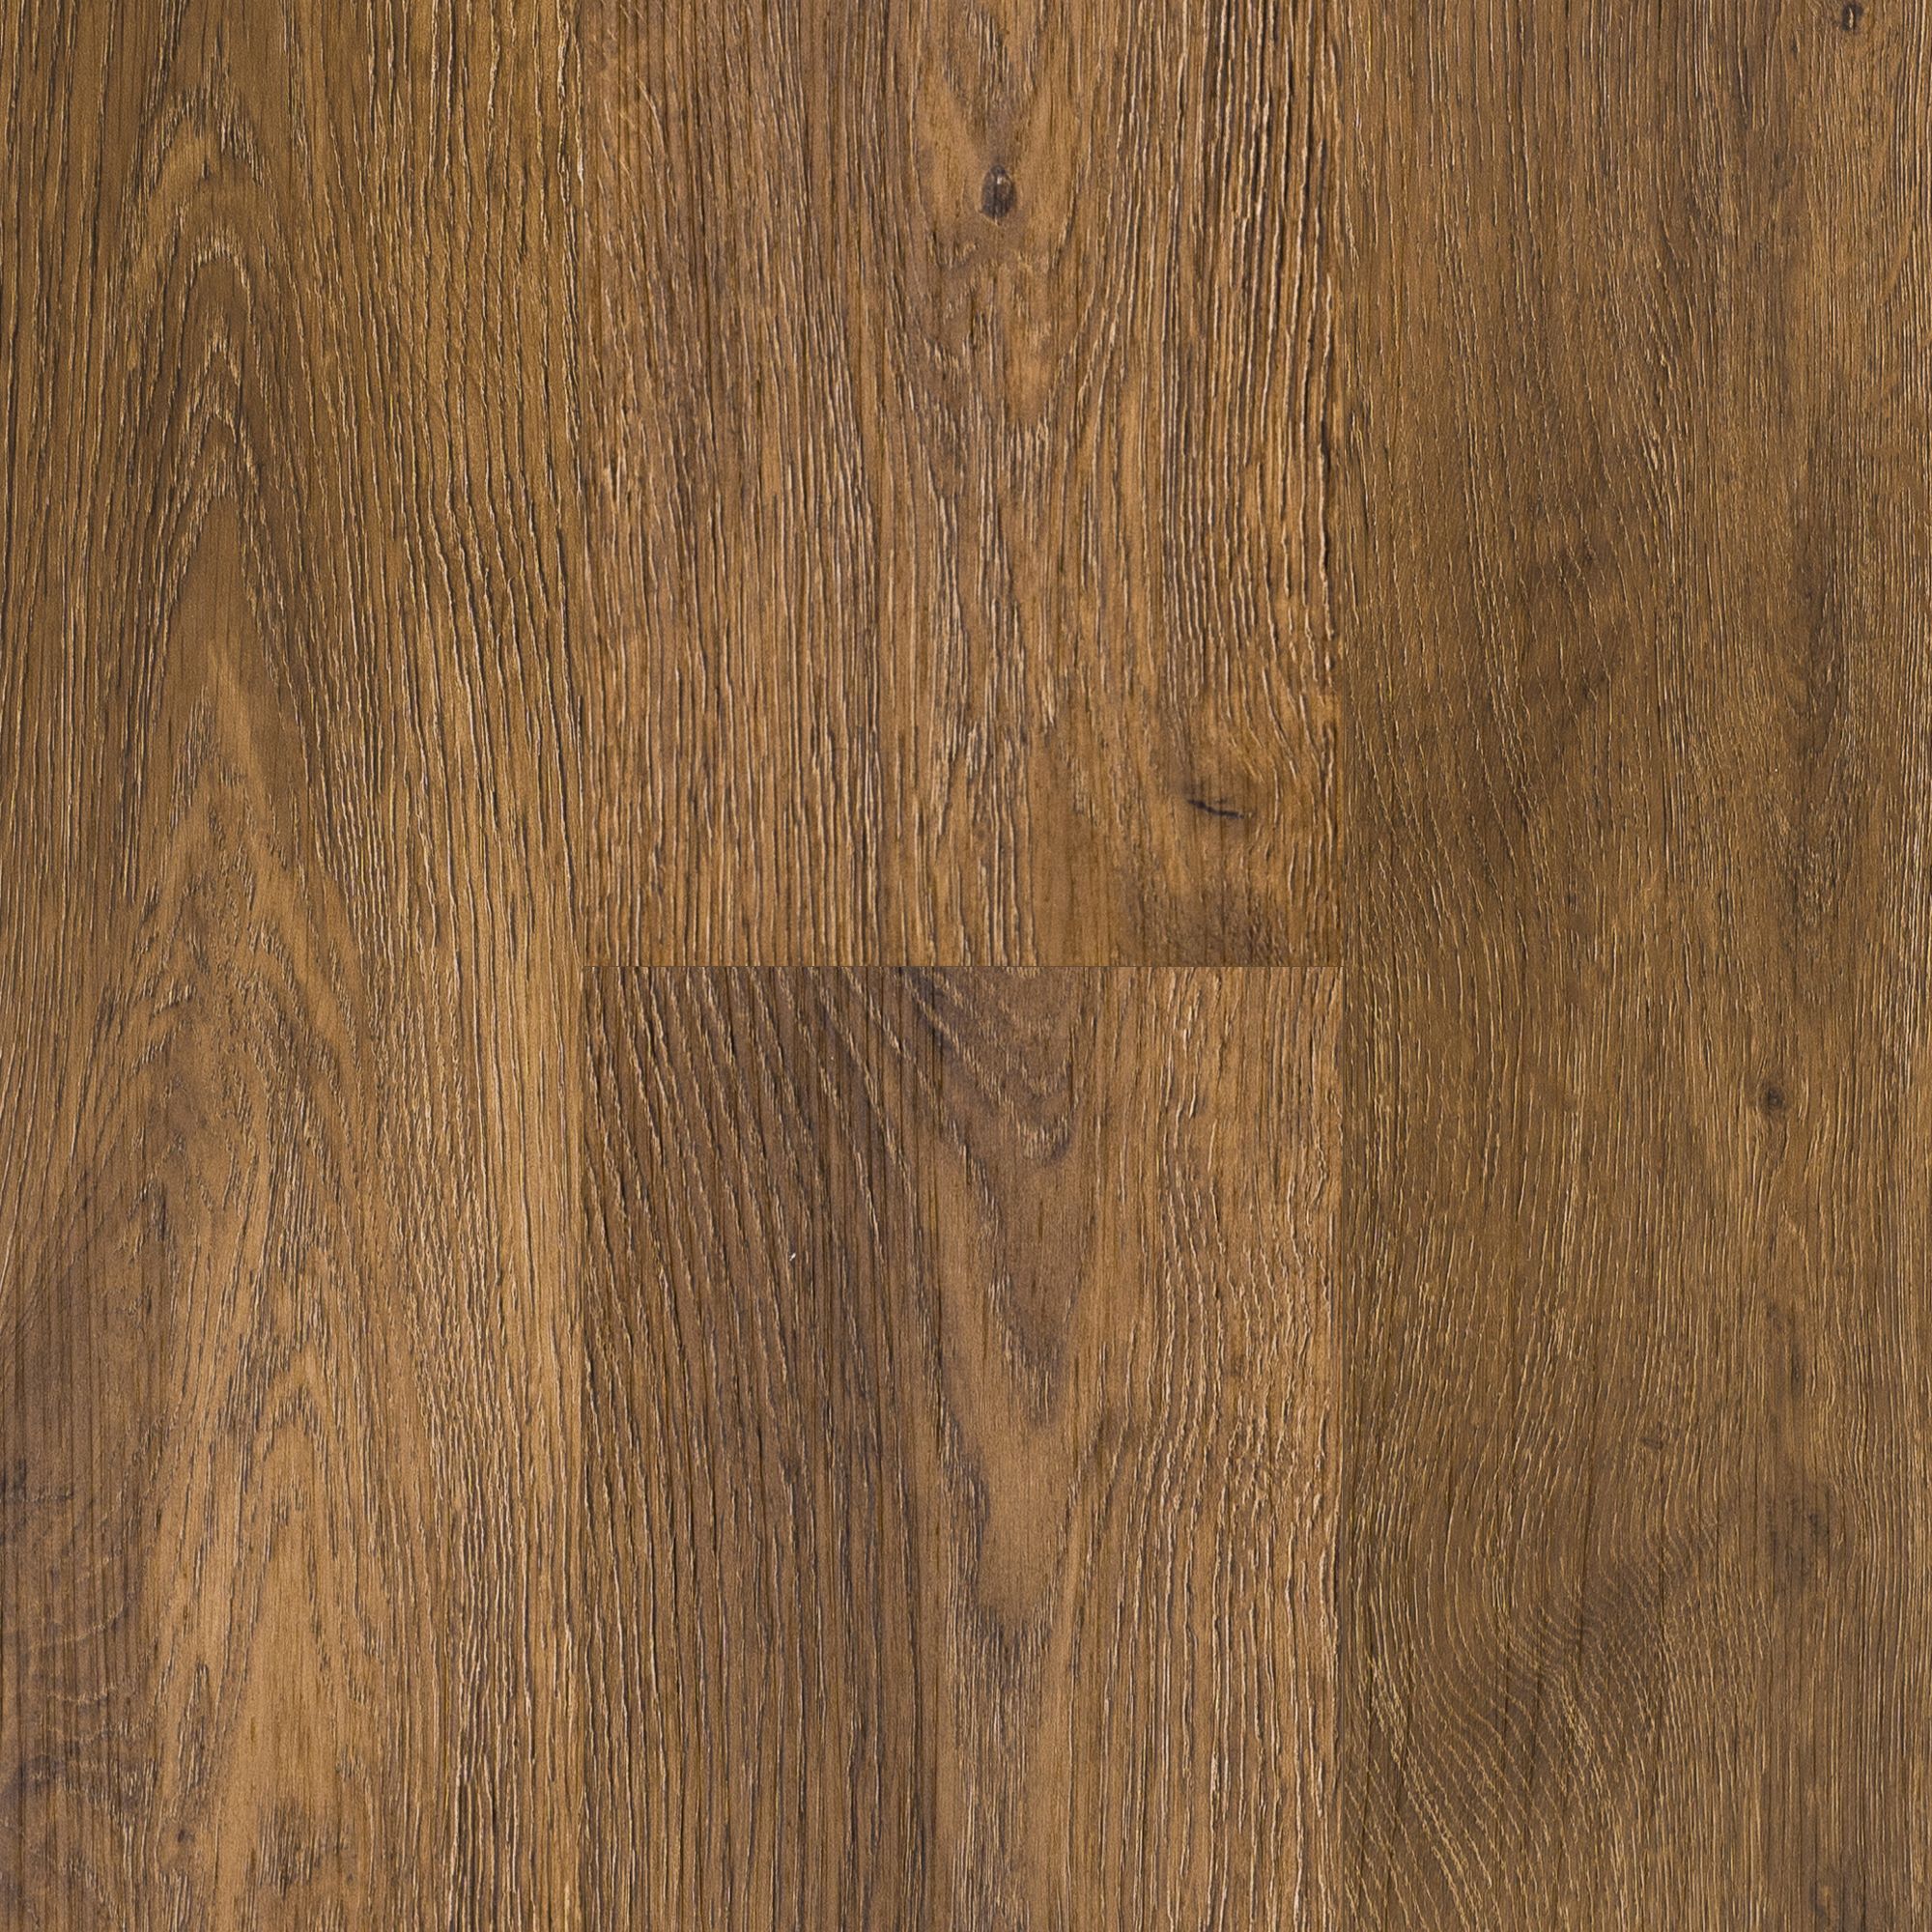 Кварц-виниловый ламинат Van Kleeck Floor Камп VKF-019 виниловый ламинат wonderful vinyl floor